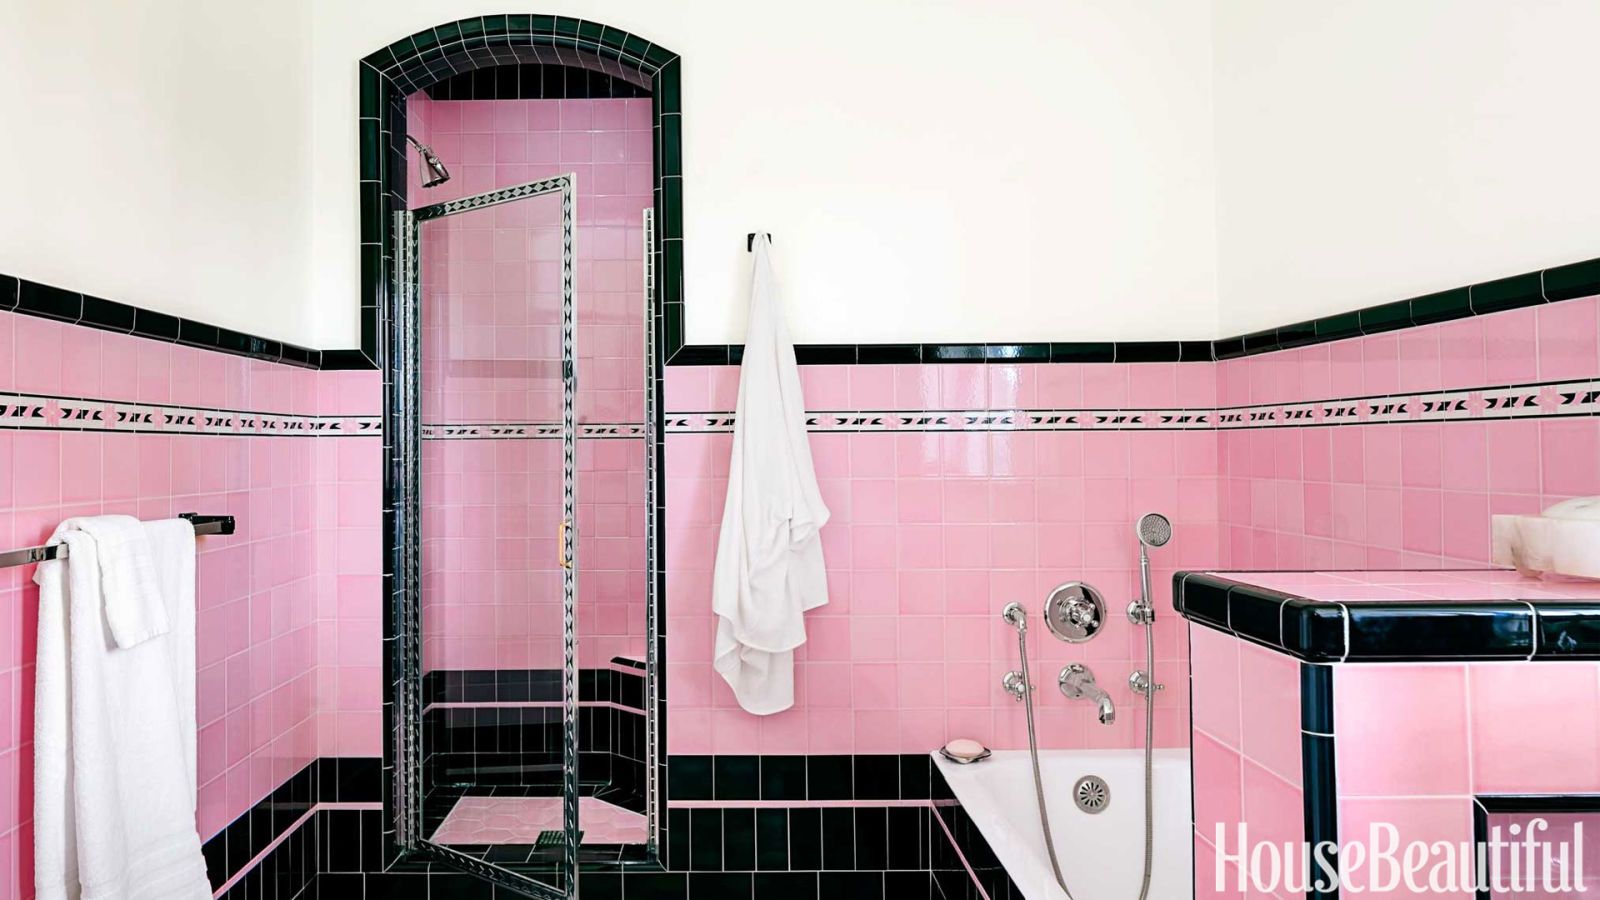 48 Bathroom Tile Design Ideas Tile Backsplash And Floor Designs